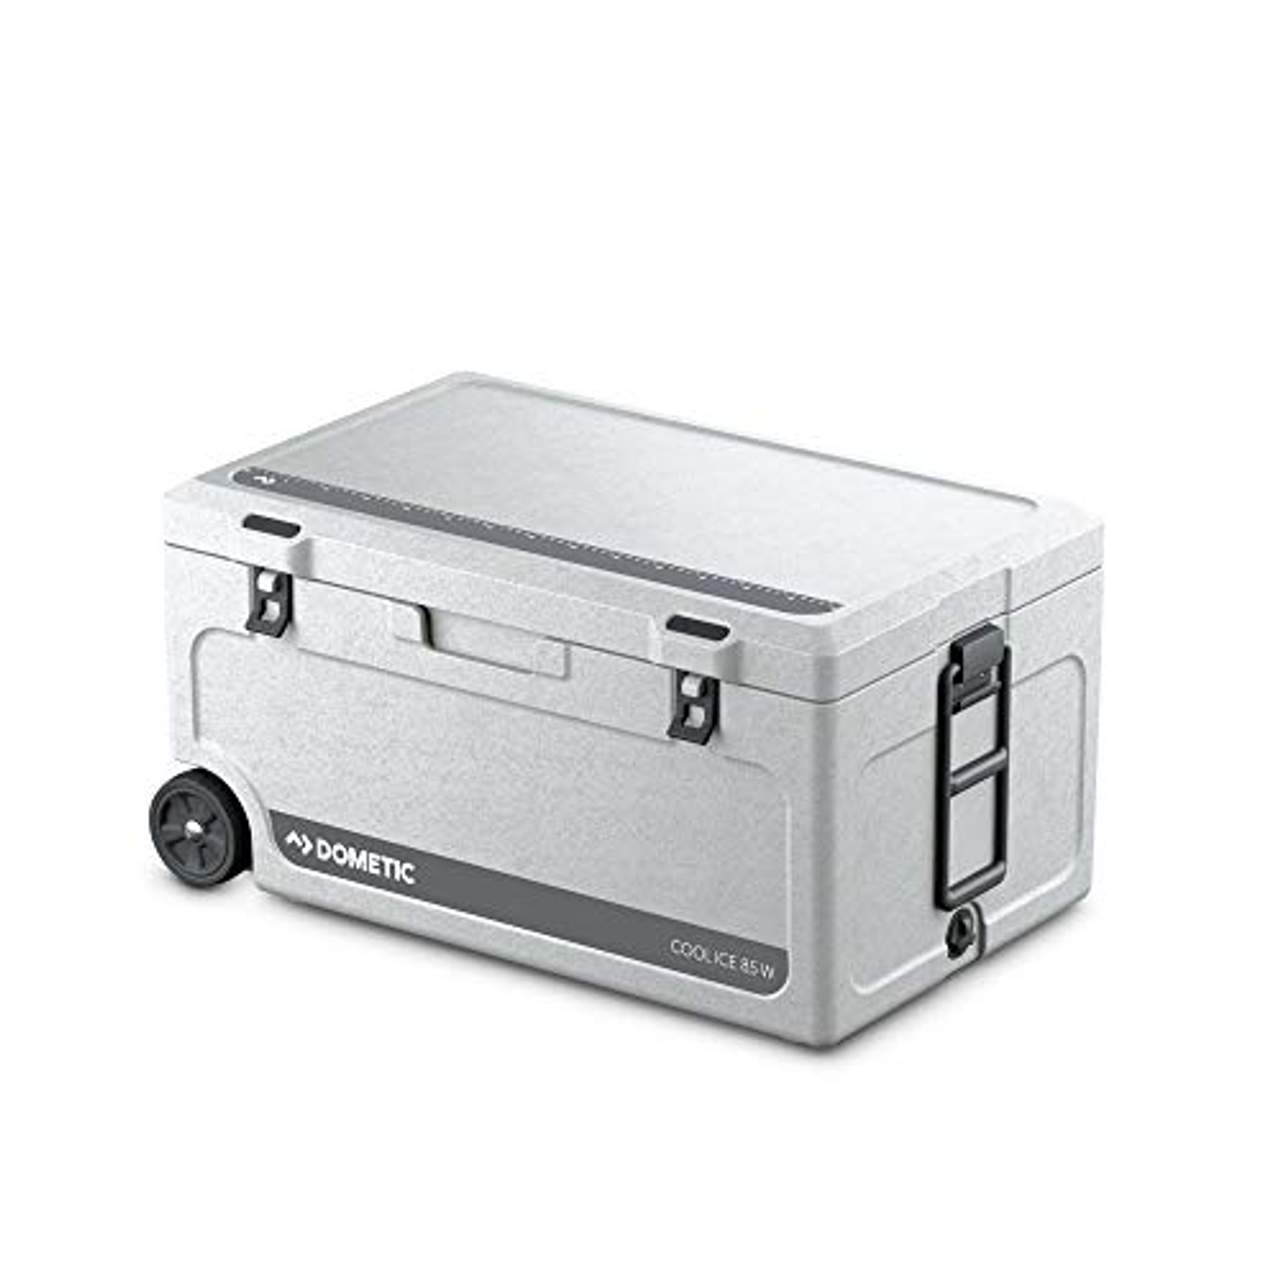 DOMETIC Cool-Ice CI 85W tragbare Passiv-Kühlbox